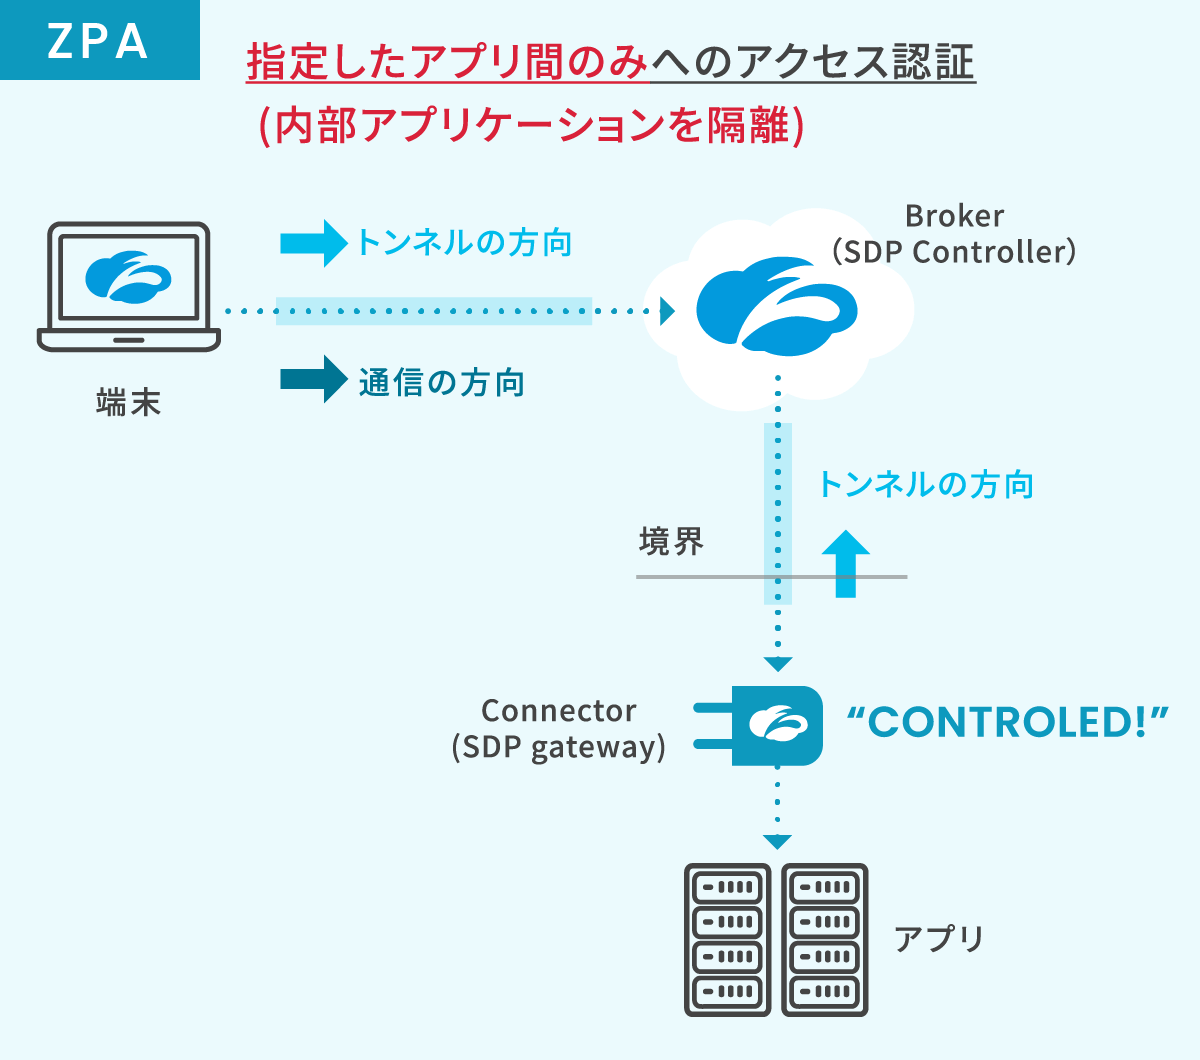 ZPAは、外側の端末と内部アプリケーション側のConnecter(SDP Gateway)からBroker(SDP Controller)で承認をした後、アクセス側は指定したアプリのみへのアクセス認証をするため、内部アプリケーションを隔離して接続が可能となる。